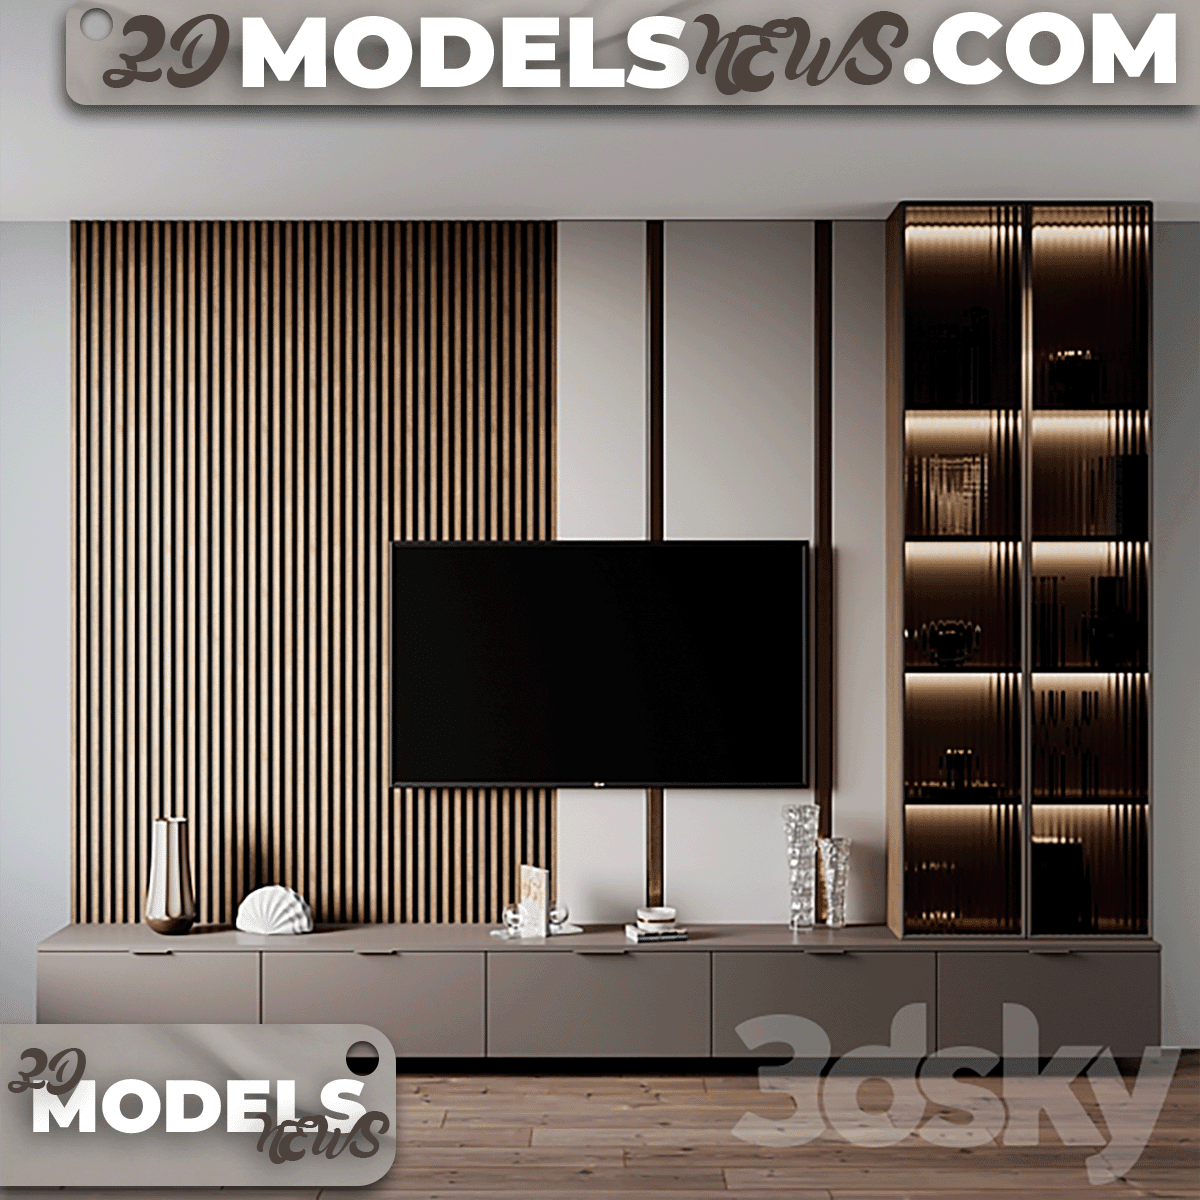 TV Wall Model set 191 1